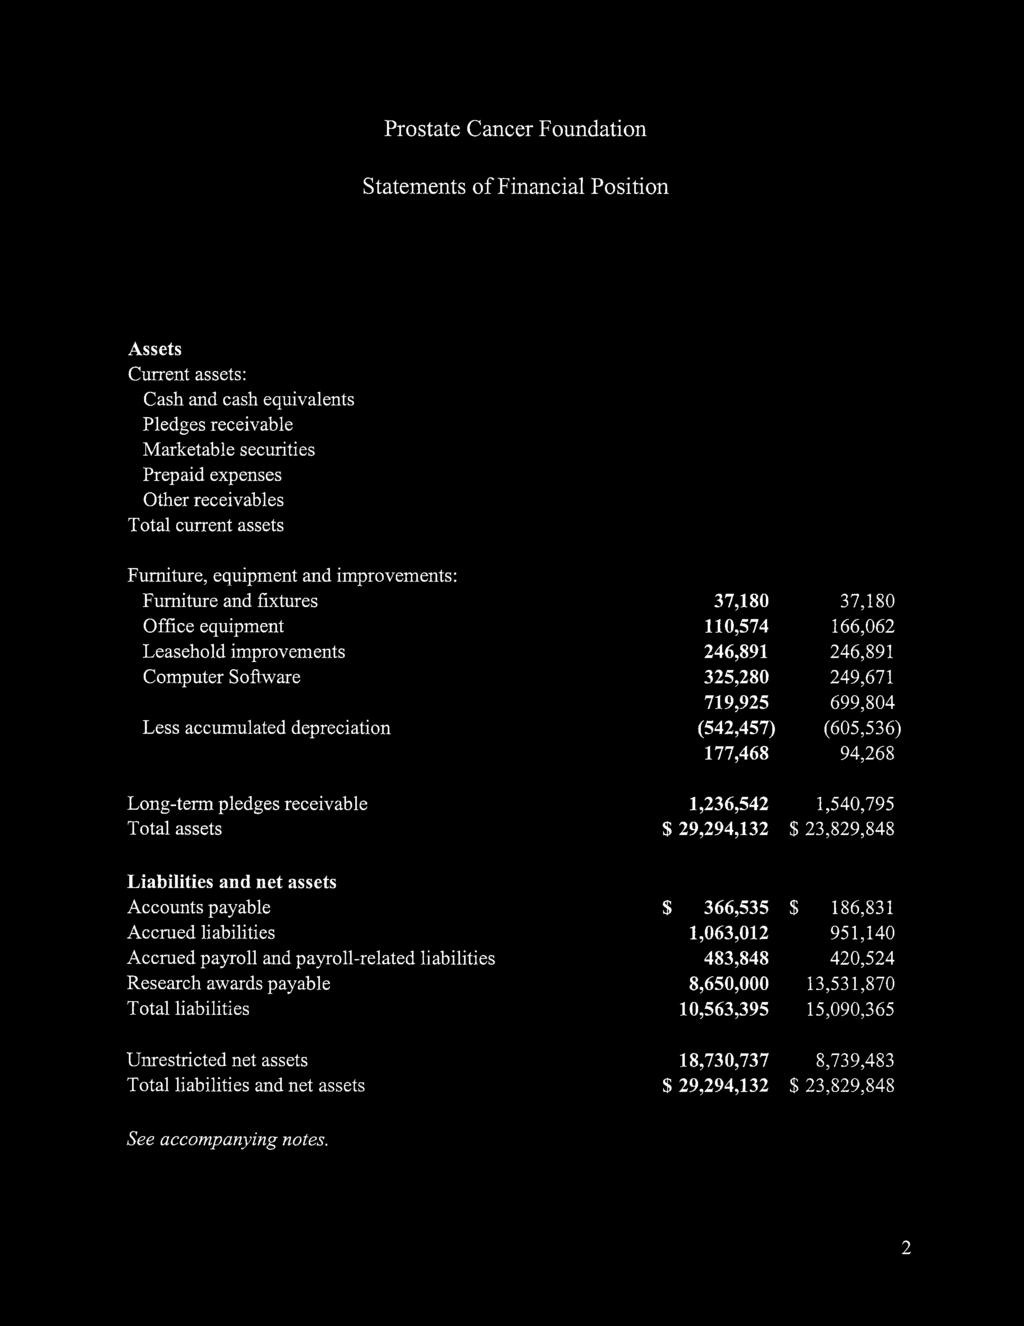 Statements of Financial Position December 31 2007 2006 Assets Current assets: Cash and cash equivalents $ 21,275,262 $ 12,802,192 Pledges receivable 6,442,212 9,190,210 Marketable securities 52,868